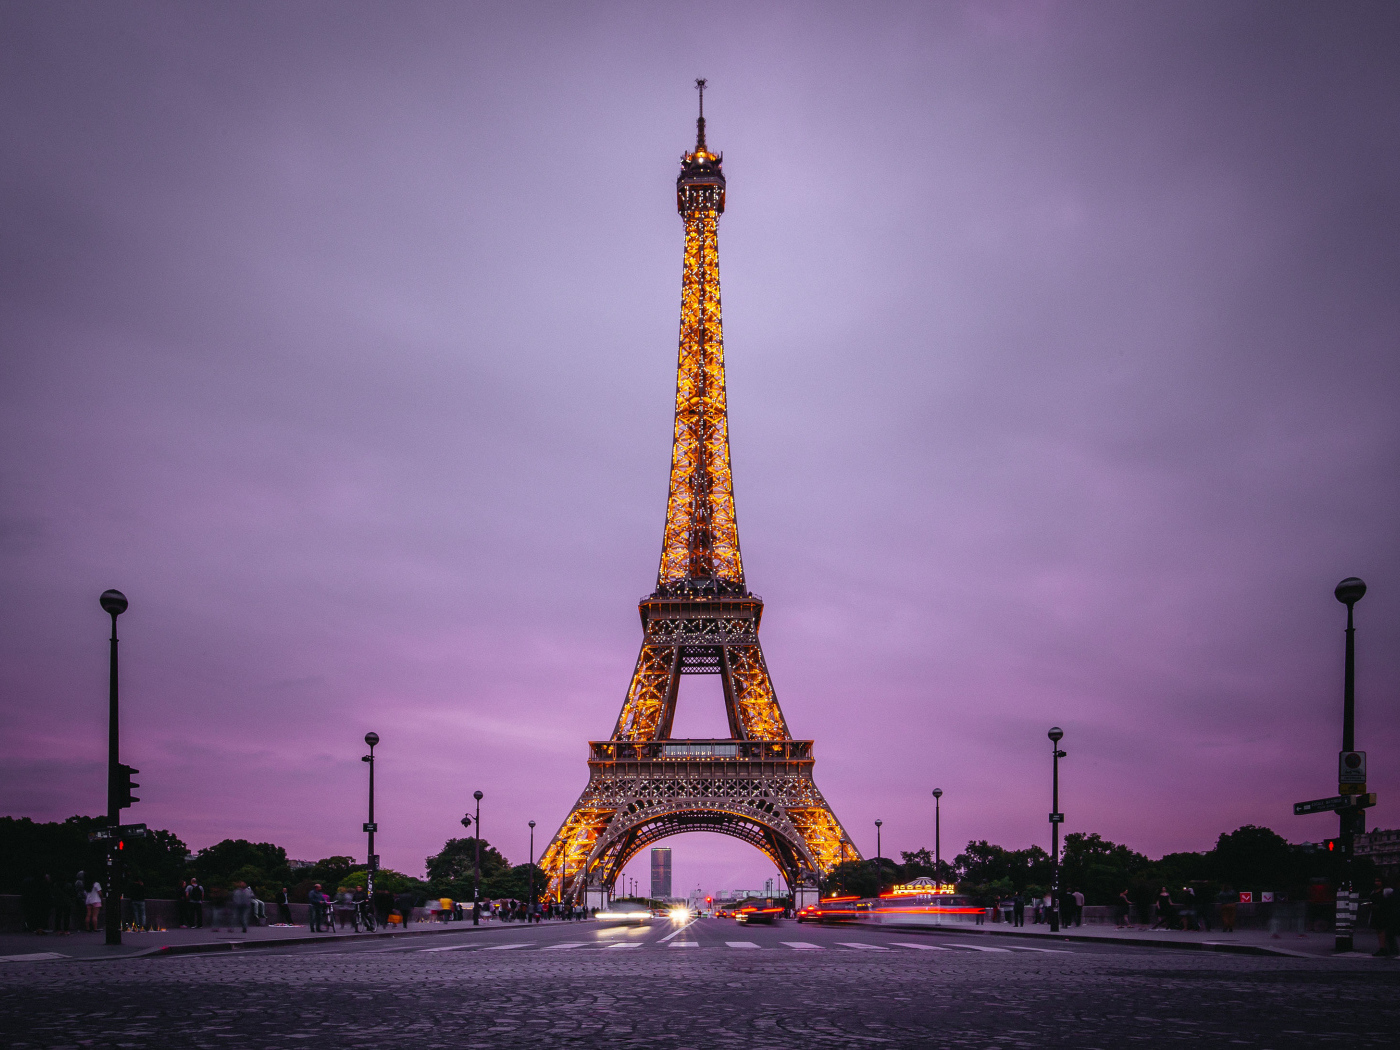 Beautiful Eiffel Tower in Paris on a background of purple sky